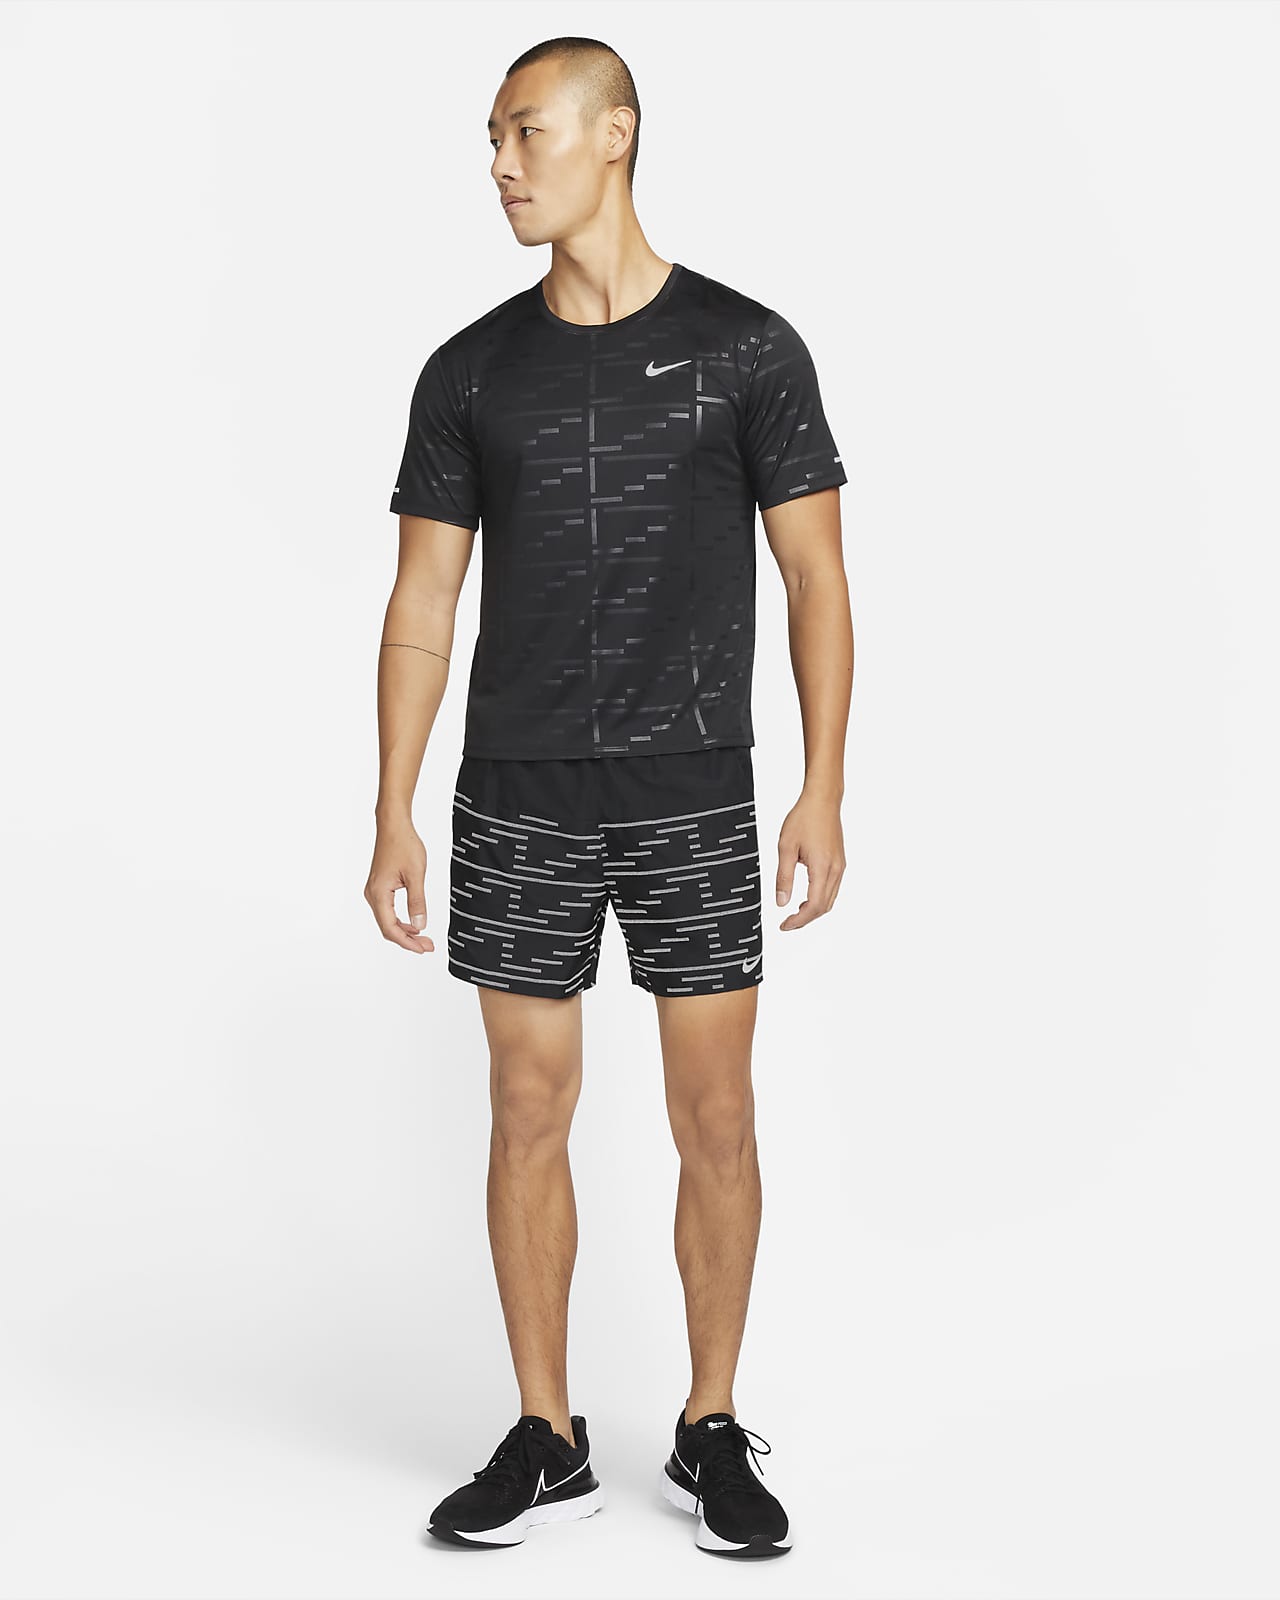 Nike NYC 2022 Marathon Legend Size 2XL Short Sleeve Shirt M21418 Nwt 